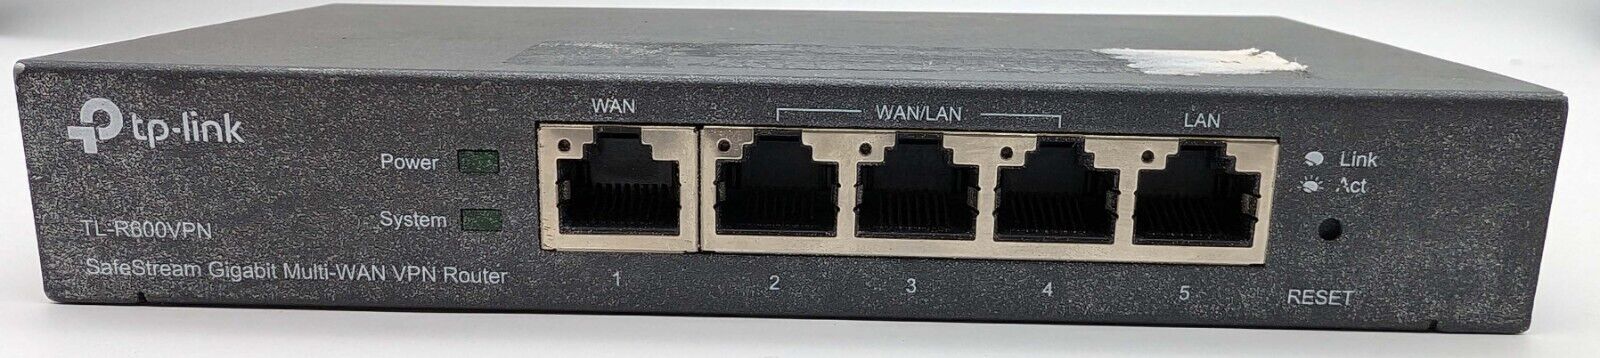 TP-Link TL-R600VPN SafeStream Gigabit Multi-WAN VPN Router - NO POWER SUPPLY